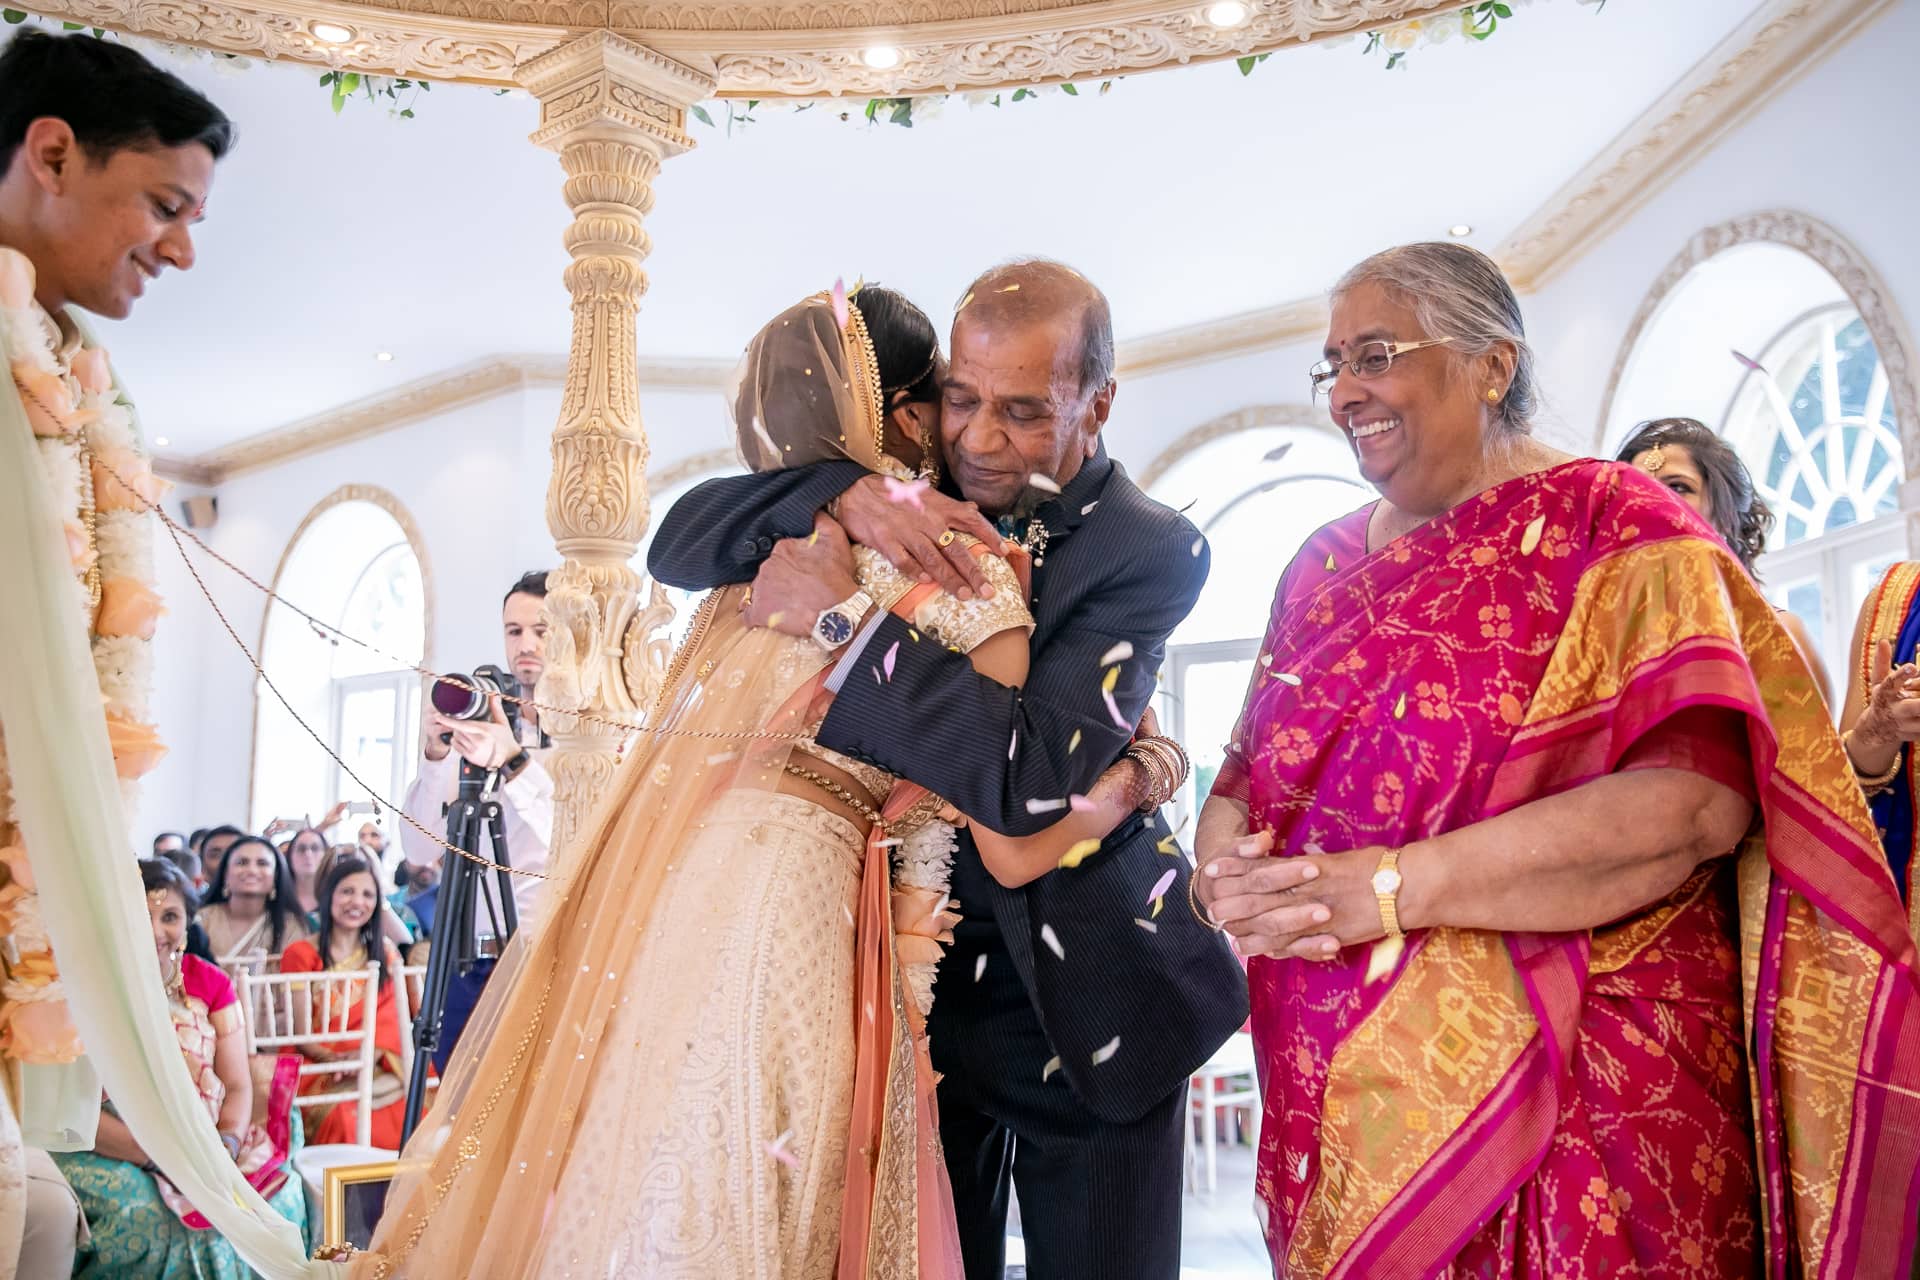 Phera ceremony during Indian wedding